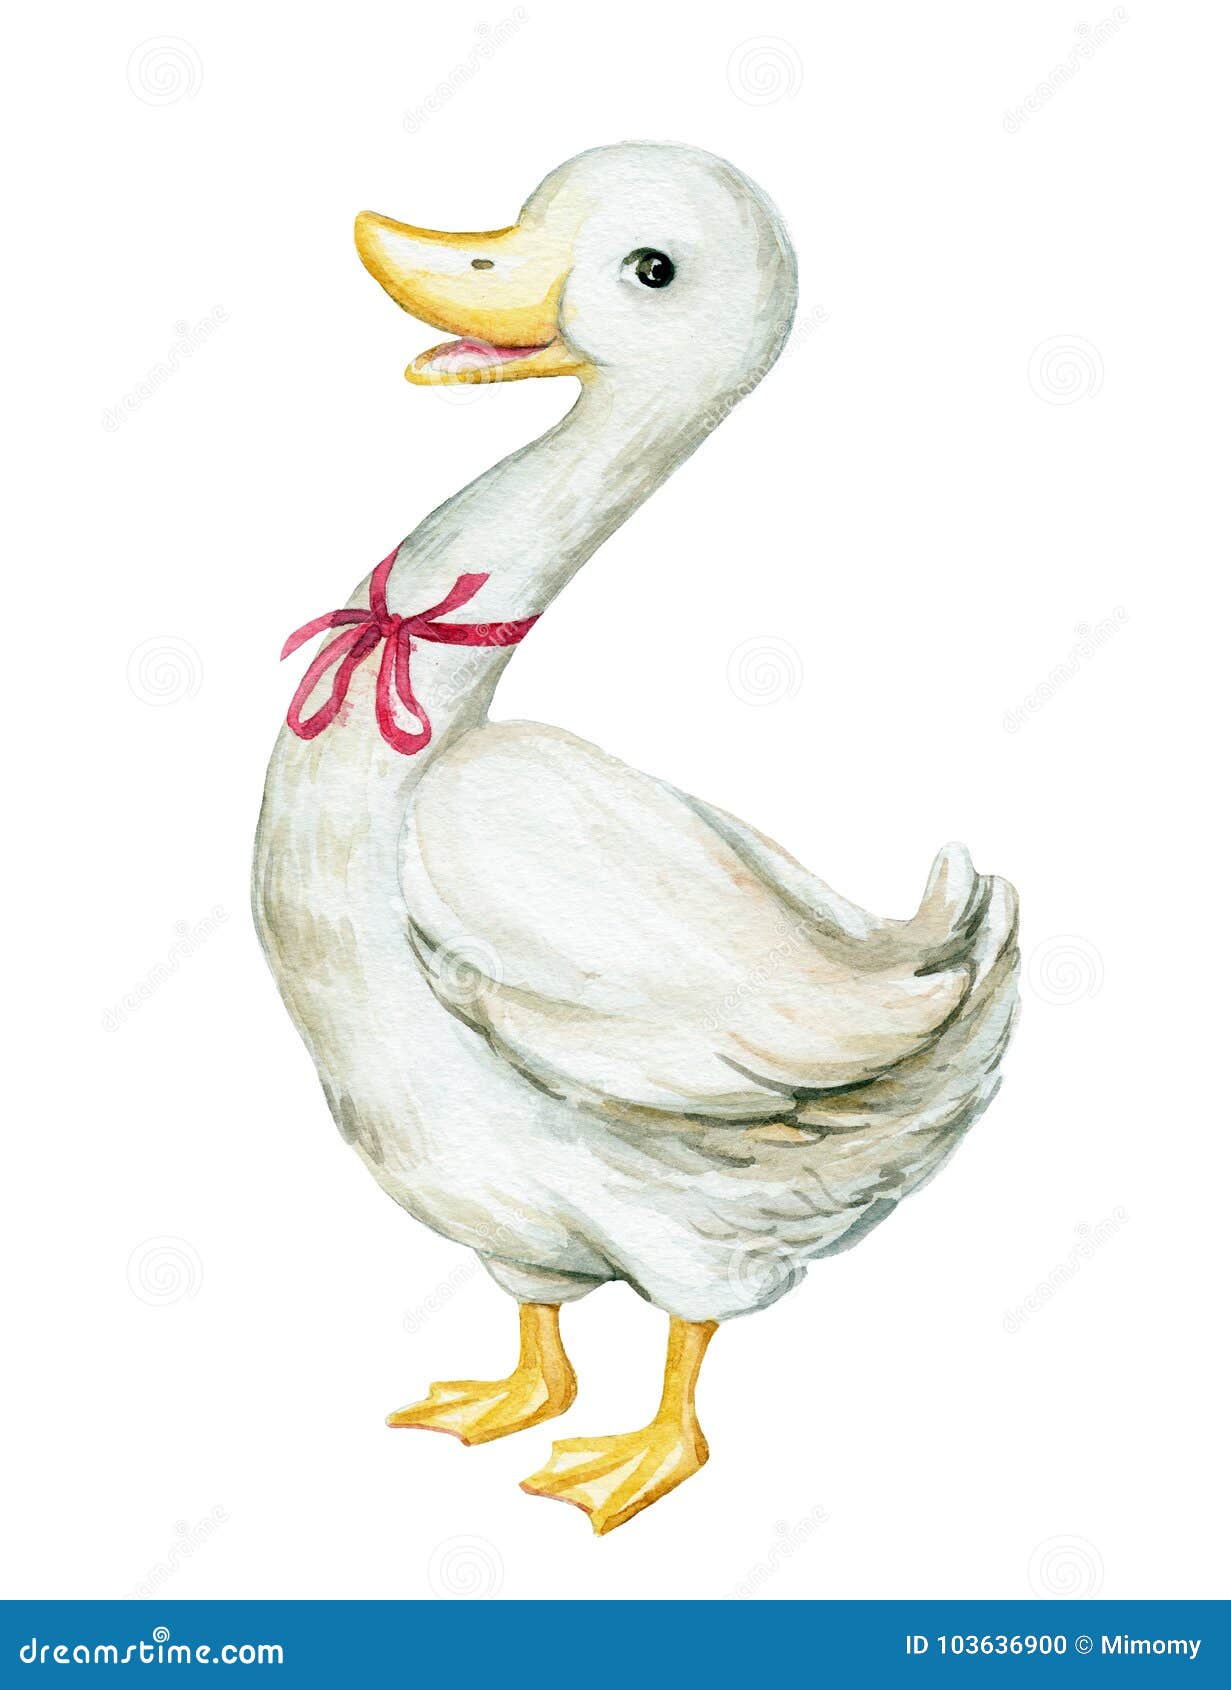 Cute white goose stock illustration. Illustration of hand - 103636900